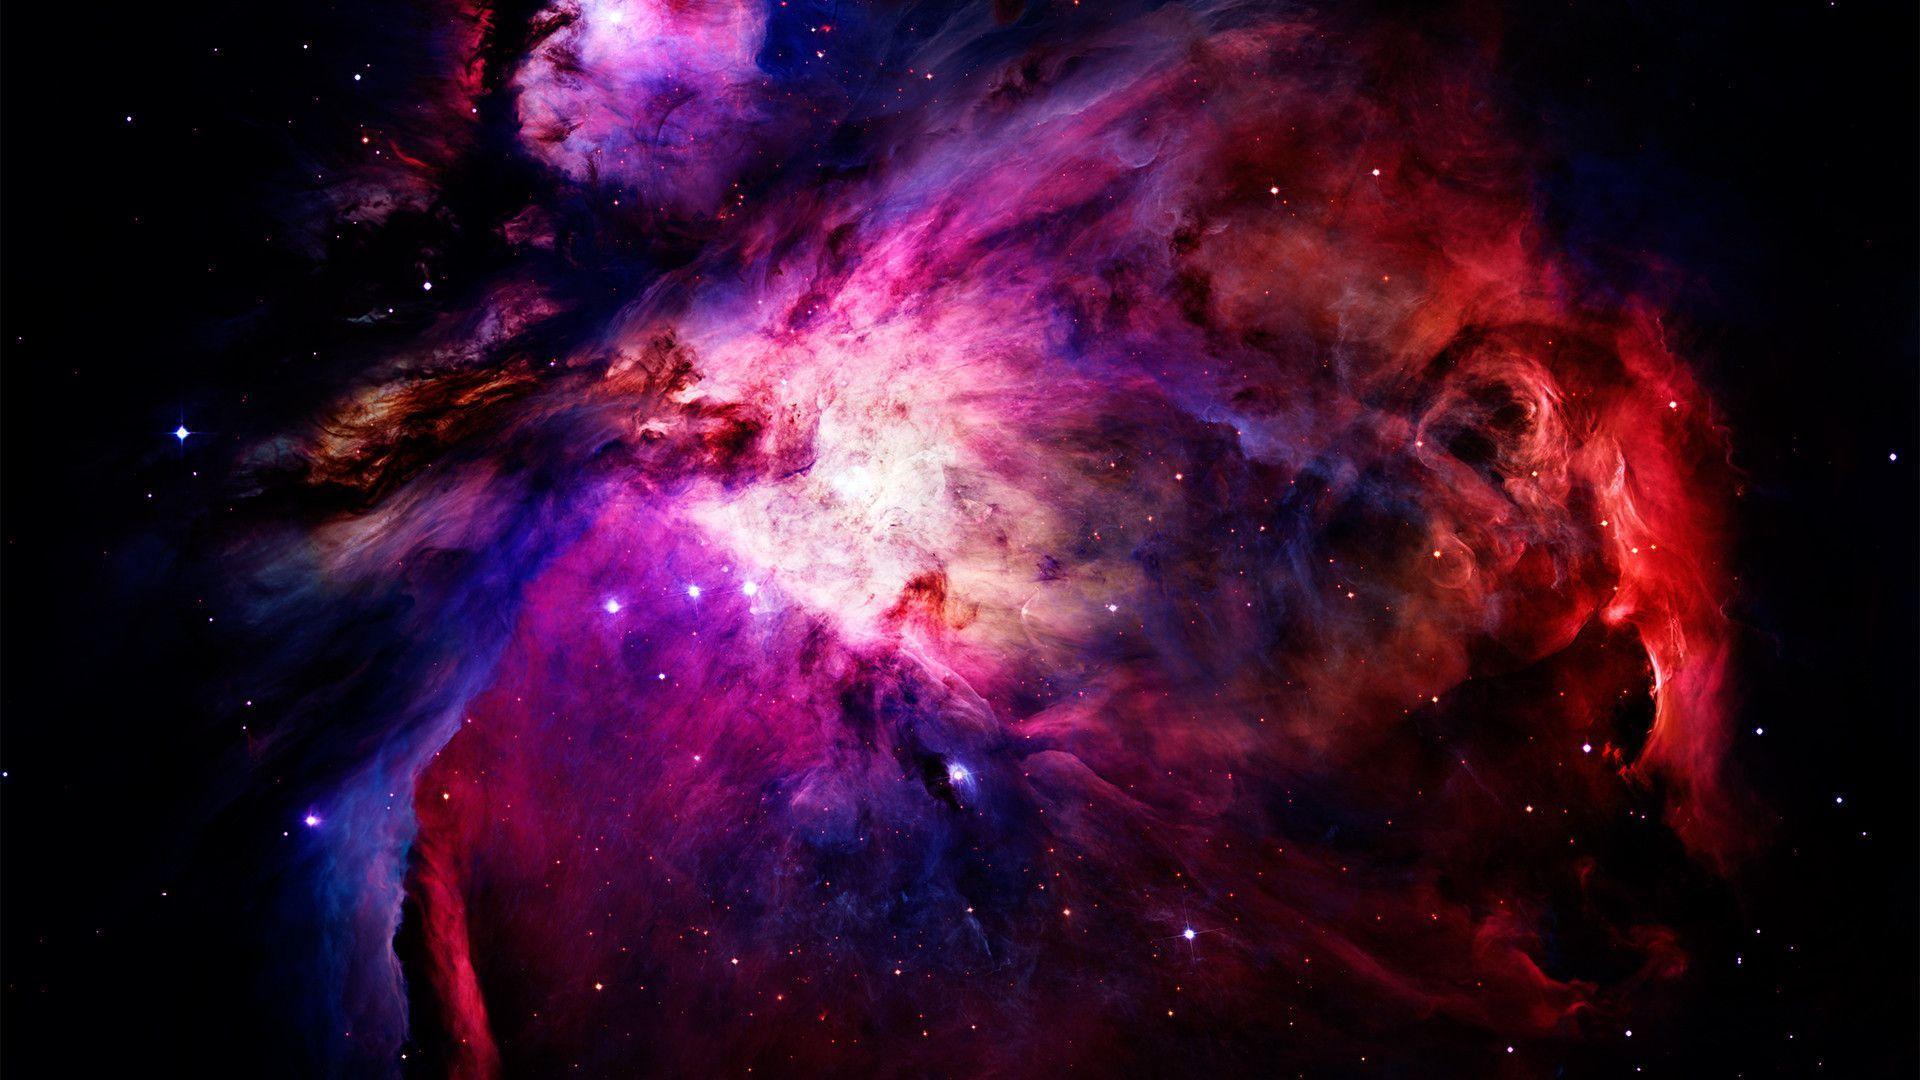 Amazing Nebula Wallpaper 10388 1920x1080 px.com